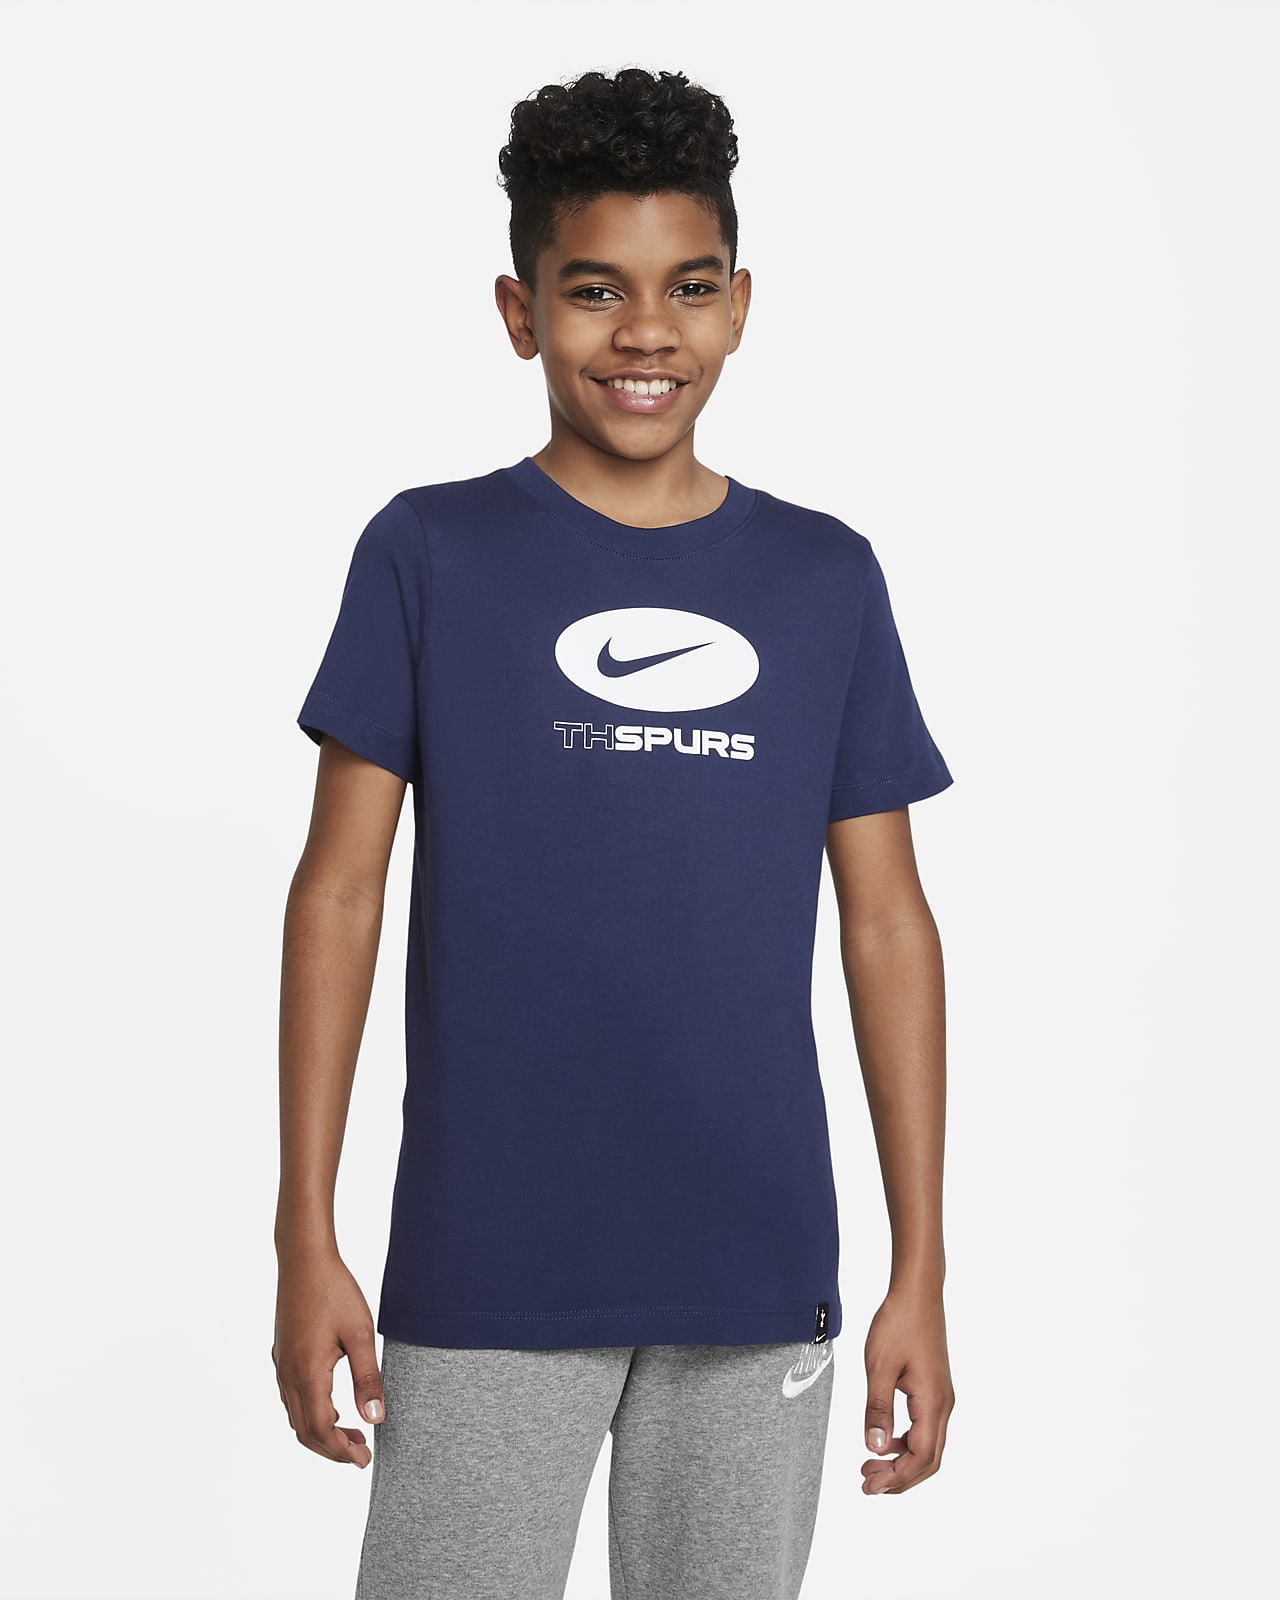 Tottenham Hotspur Swoosh Fußball-T-Shirt für ältere Kinder